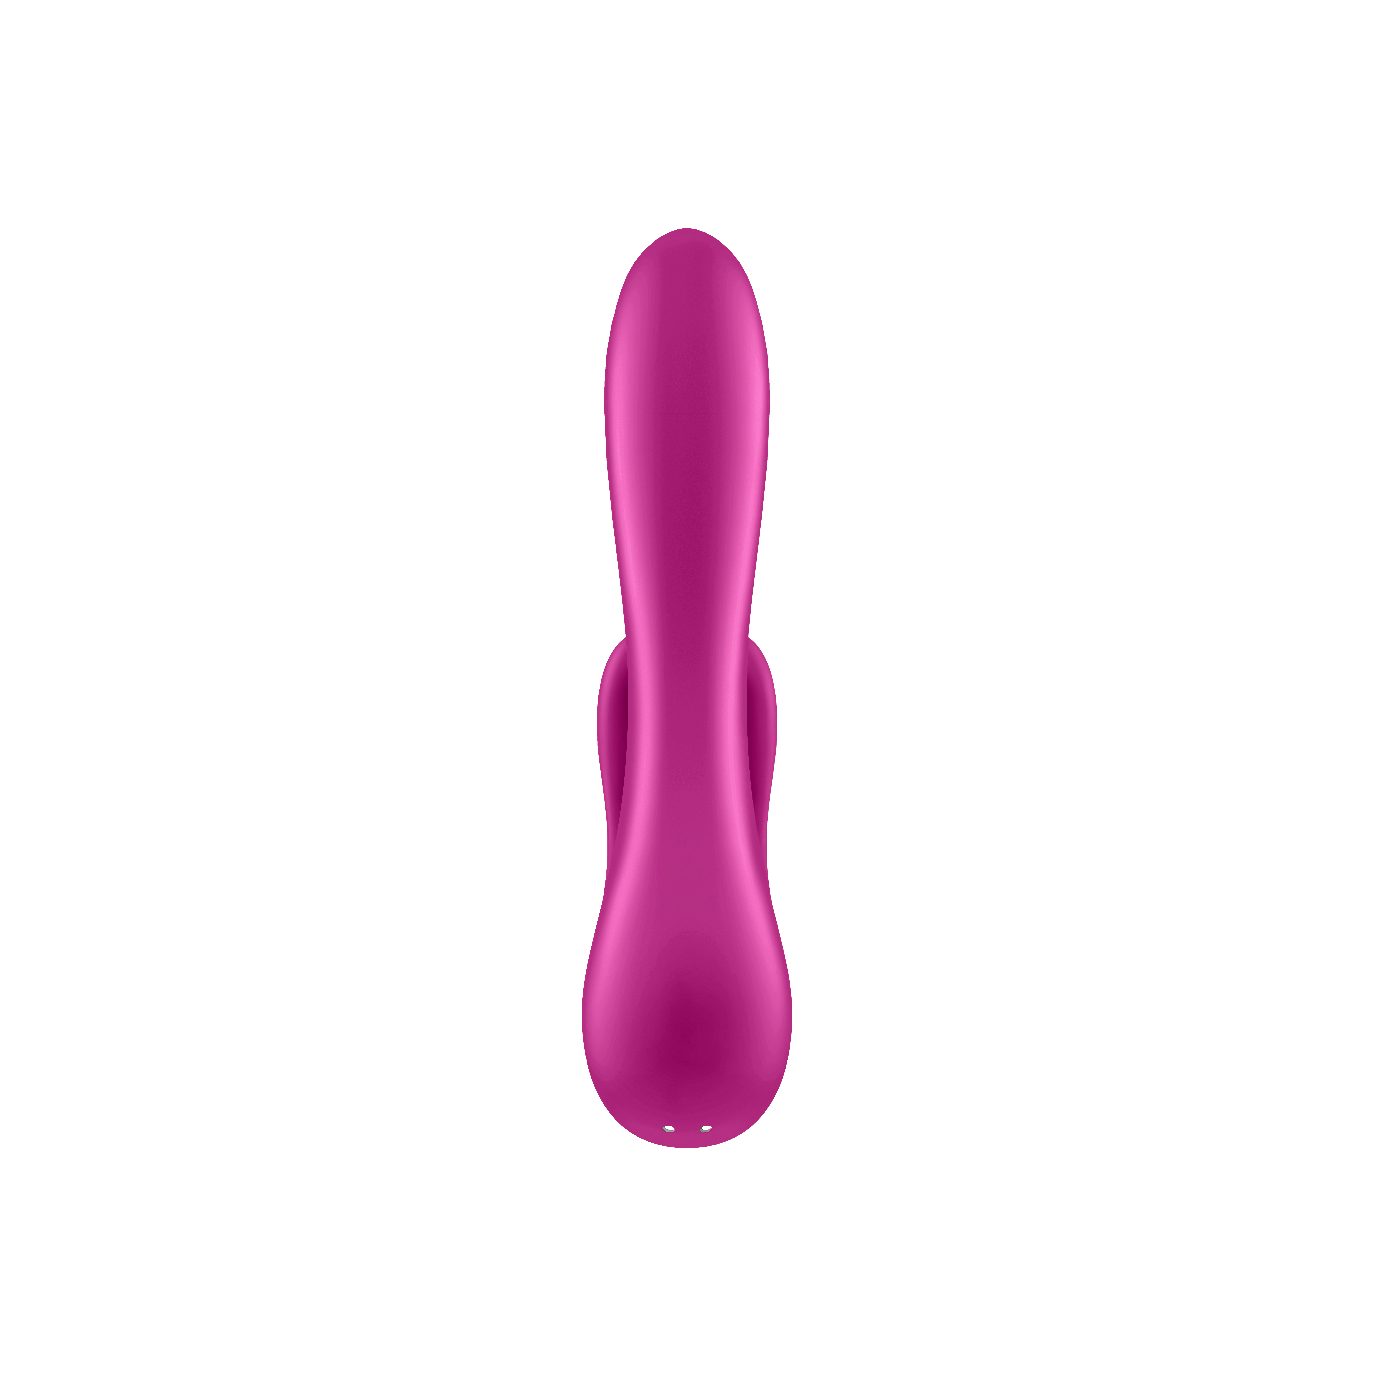 Flex Klitoris-Stimulator lila mit Bluetooth, Satisfyer 20cm "Double Satisfyer Rabbit, App", Connect App,